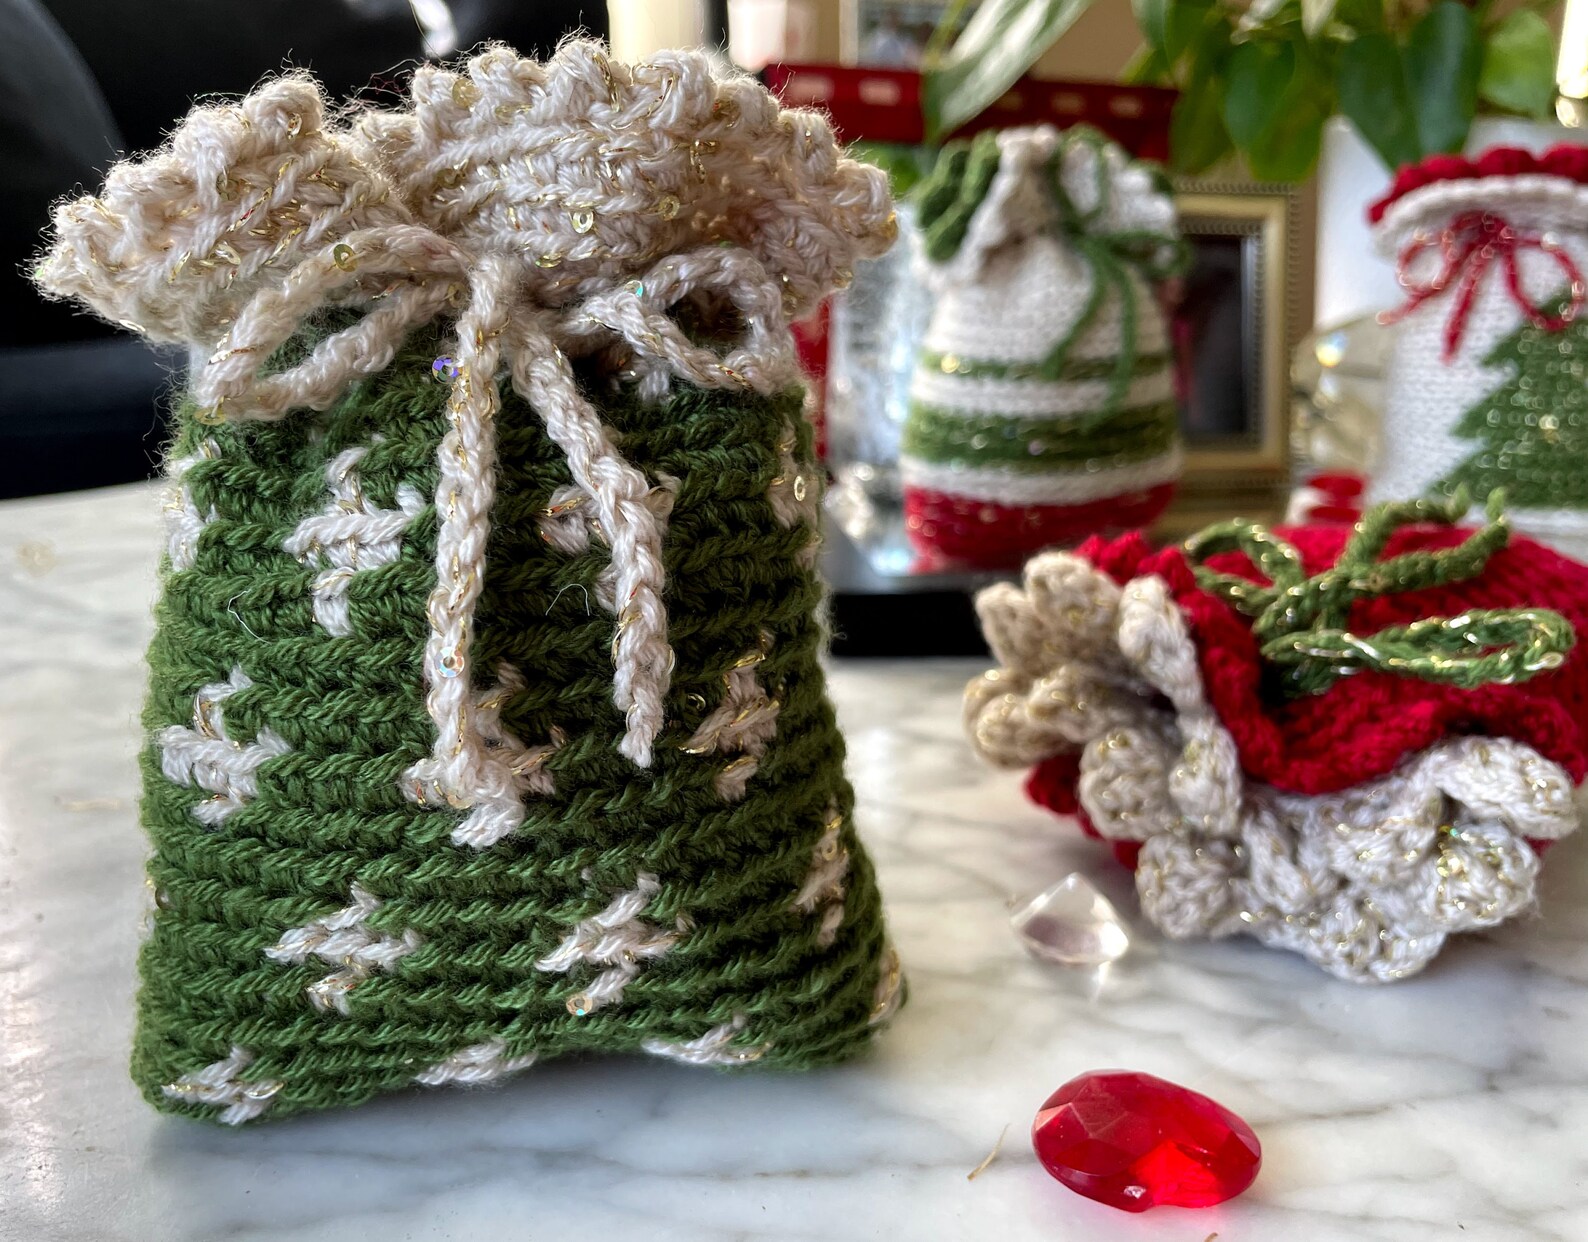 Luna's Christmas Gift Bags Crochet Pattern 4-in-1 Bundle. - Etsy